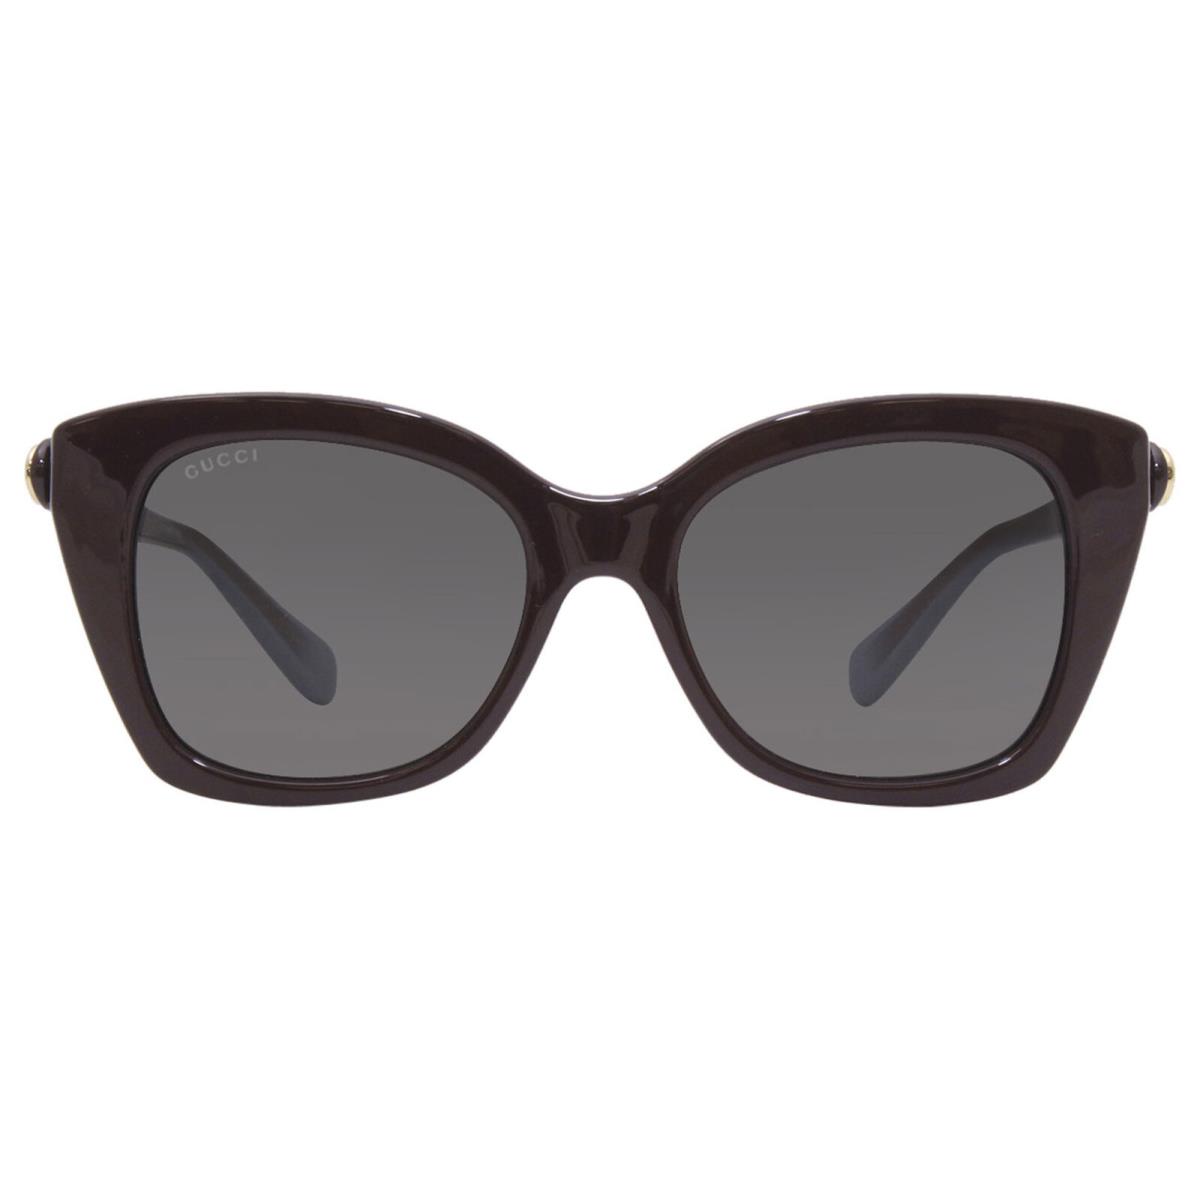 Gucci GG0921S 004 Sunglasses Women`s Brown/grey Lenses Fashion Rectangular 55mm